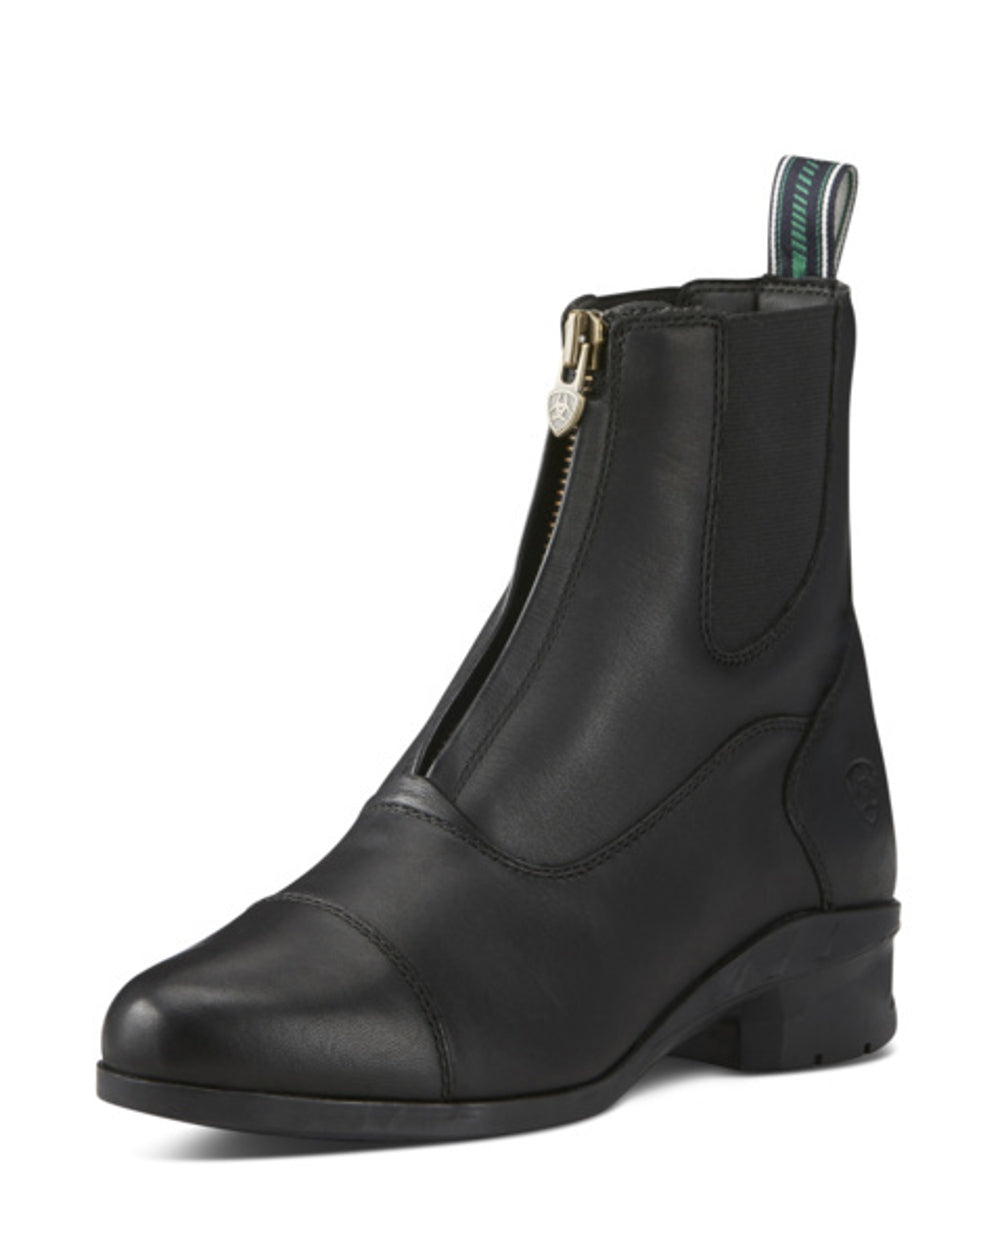 Ariat Womens Heritage IV Zip Paddock Boots in Black 